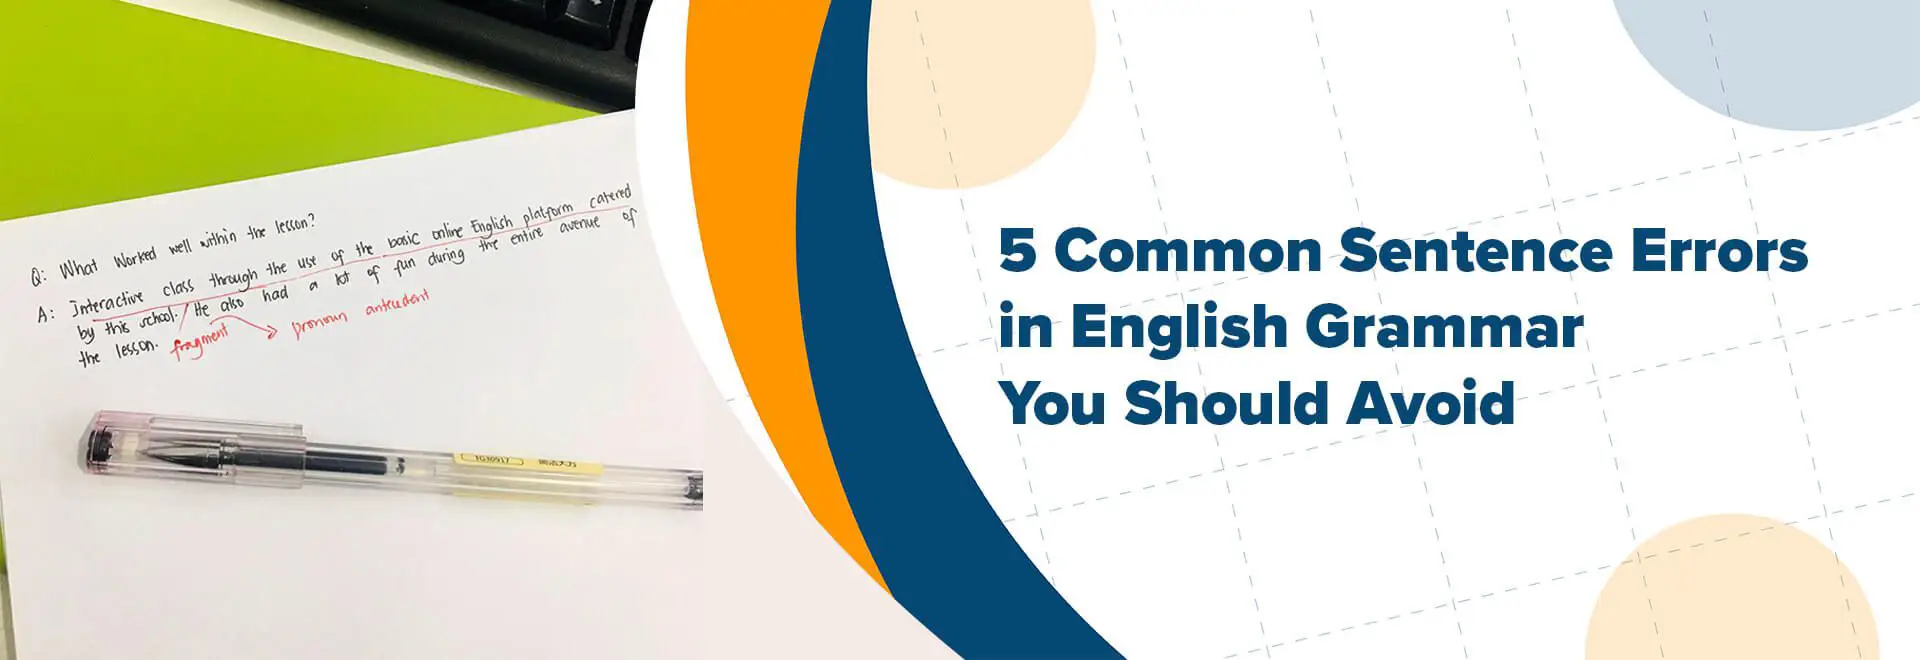 Common Sentence Errors in English Grammar